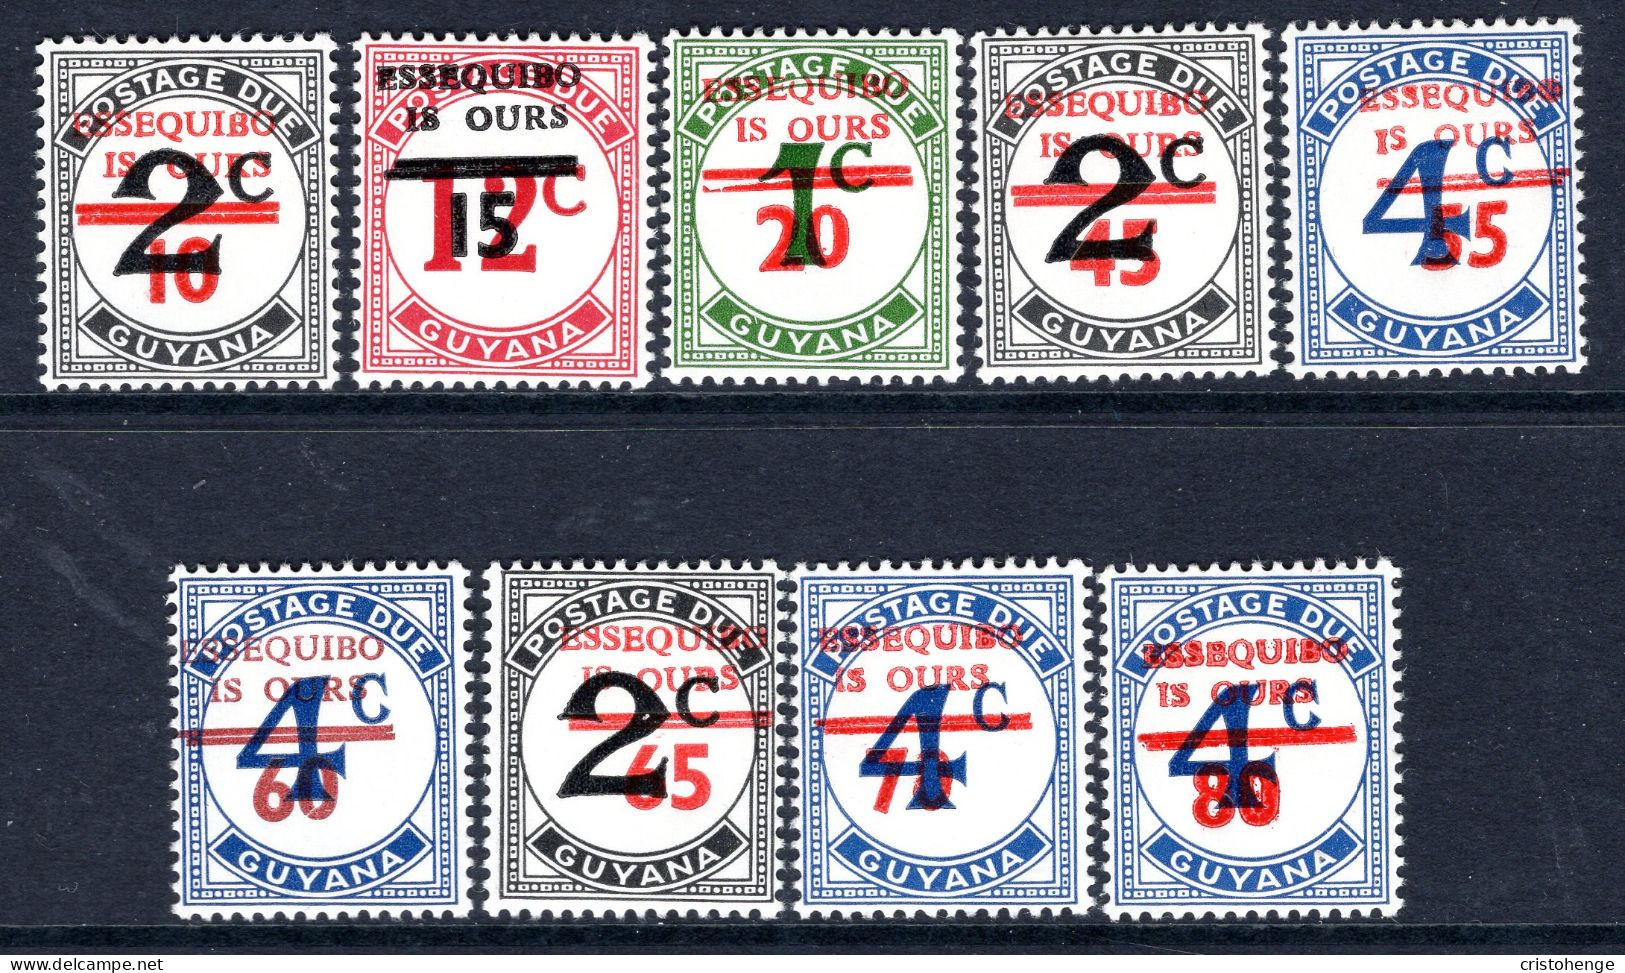 Guyana 1981 Postage Due Surcharges - Type II - Set HM (SG 782B-790B) - Guyana (1966-...)